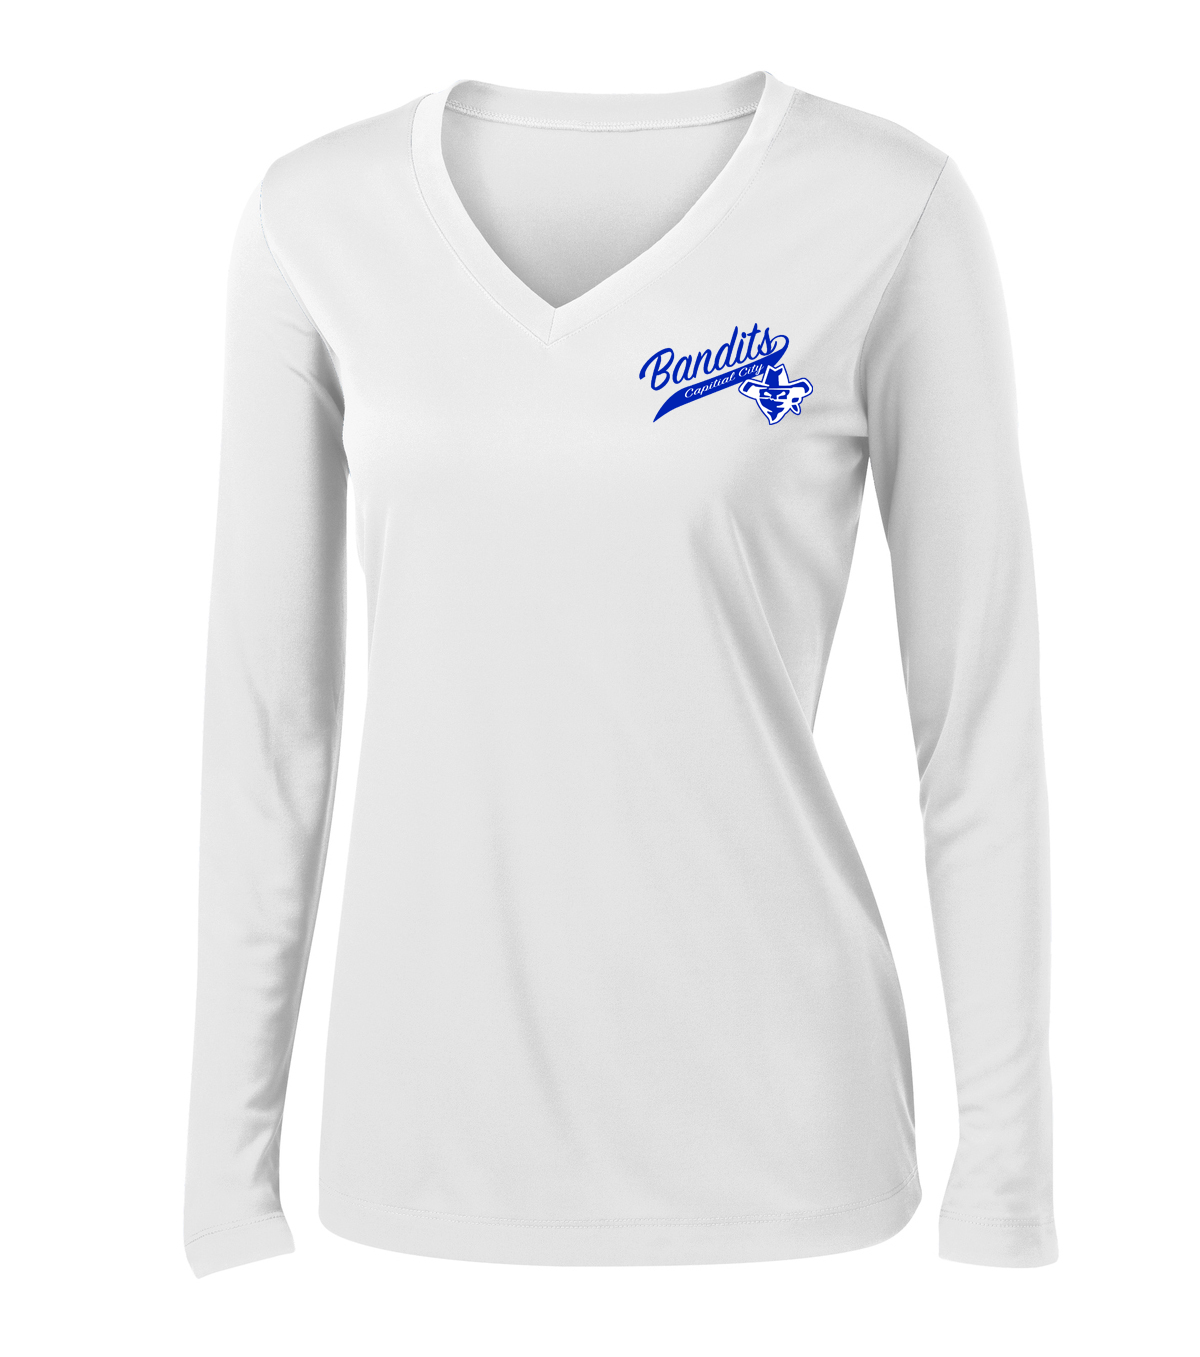 Capital City Baseball Women's Long Sleeve Performance Shirt